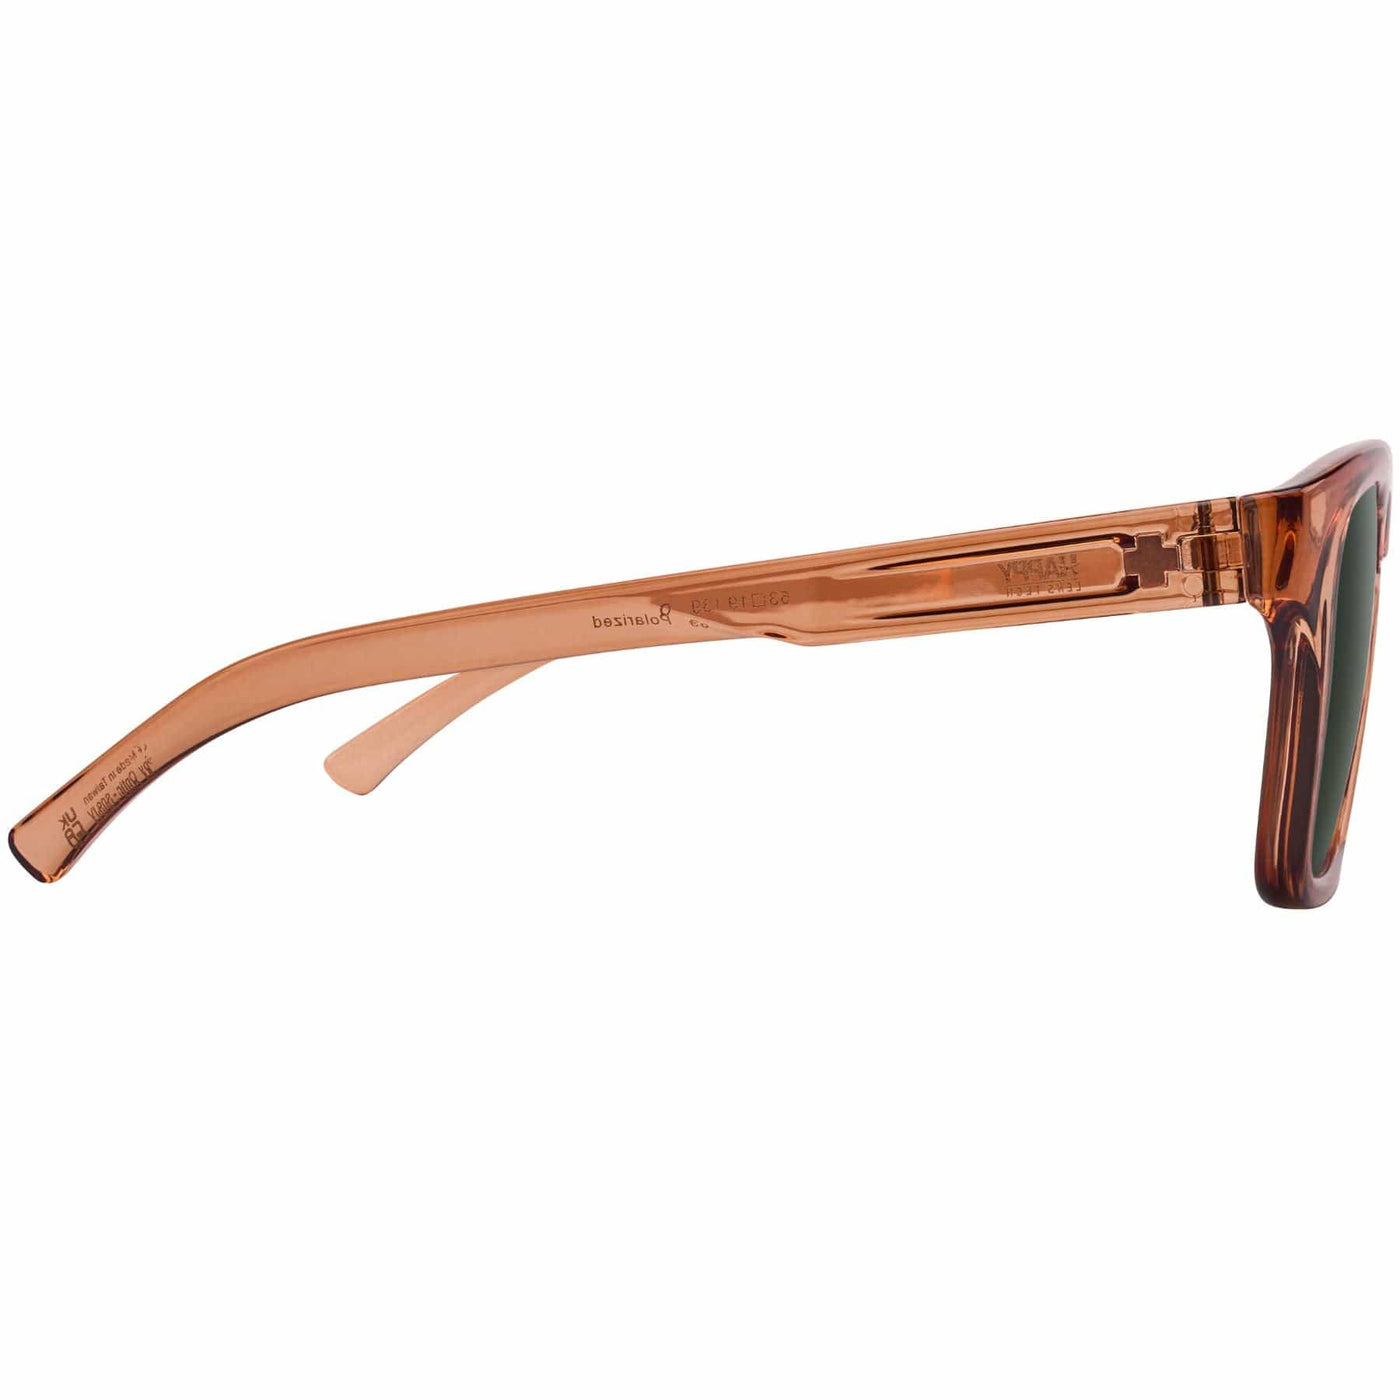 SPY SAXONY Polarized Sunglasses, Happy Lens - Zach Miller 8Lines Shop - Fast Shipping